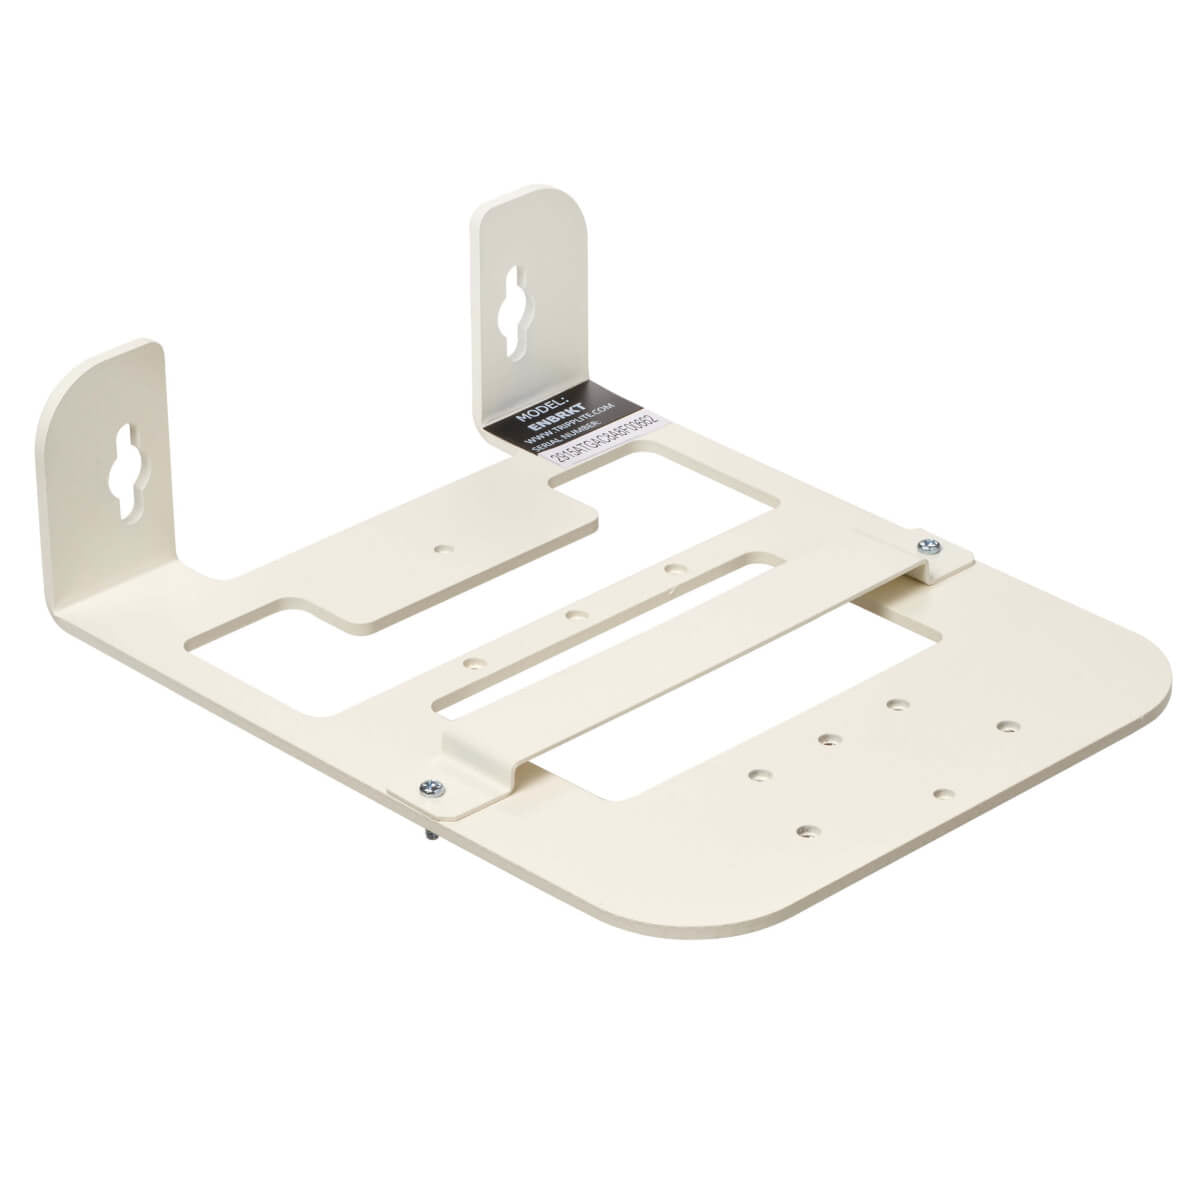 Tripp Lite ENBRKT Universal Wall Bracket for Wireless Access Point - Right Angle, Steel, White